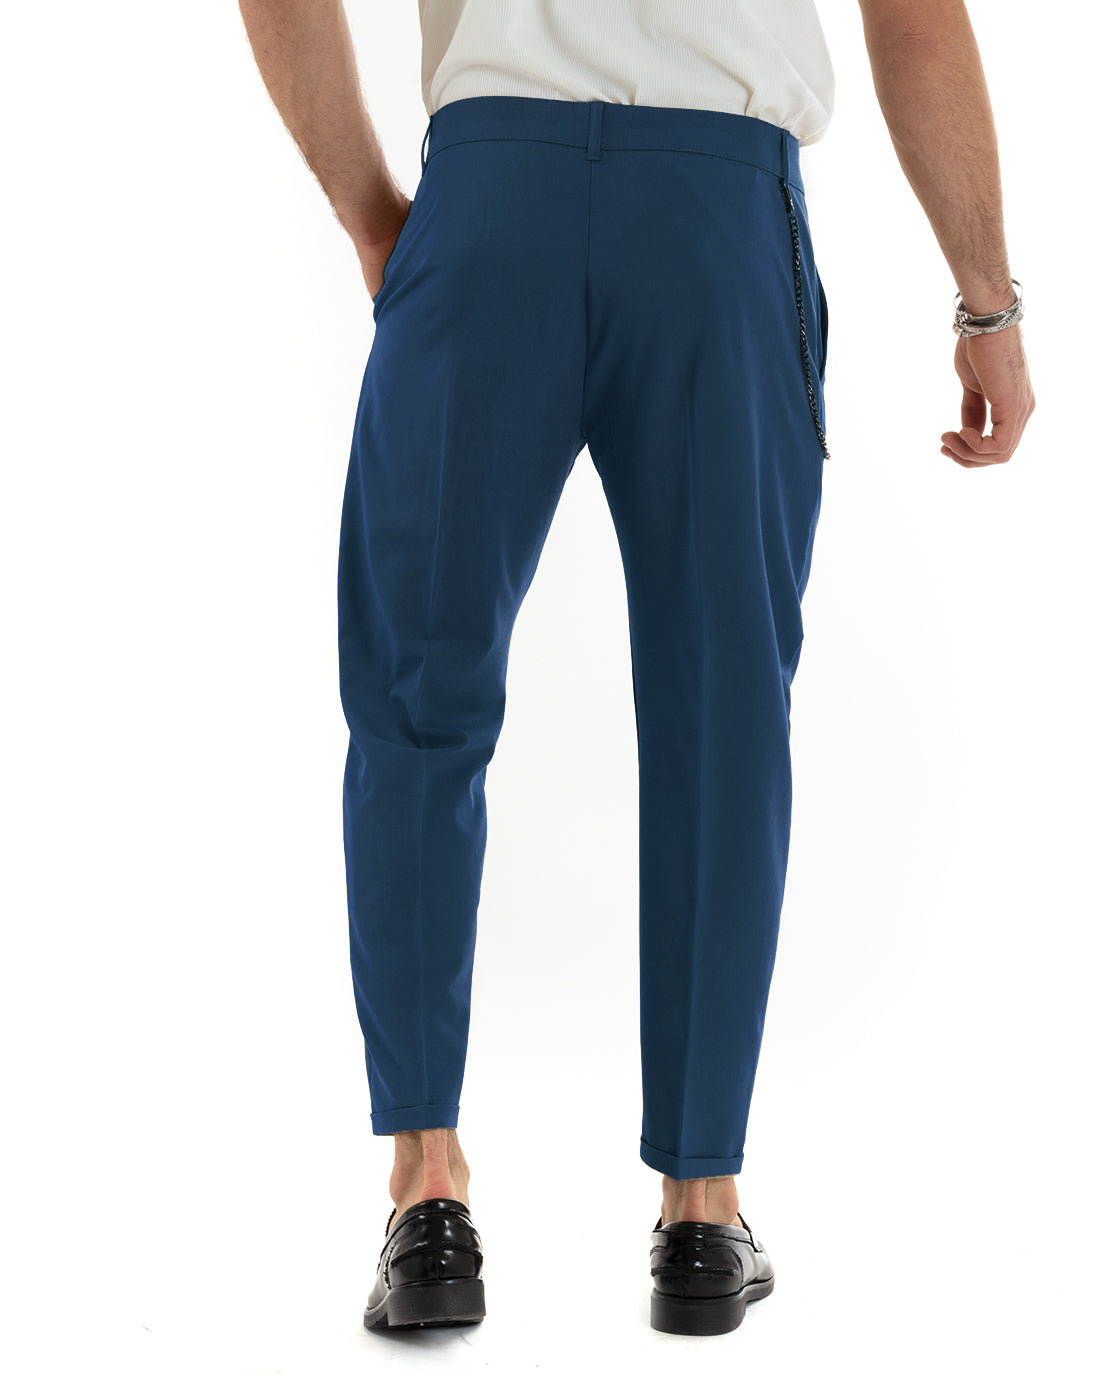 Pantaloni Uomo Tasca America Viscosa Blu Royal Capri Casual Classico Pinces GIOSAL-P5942A